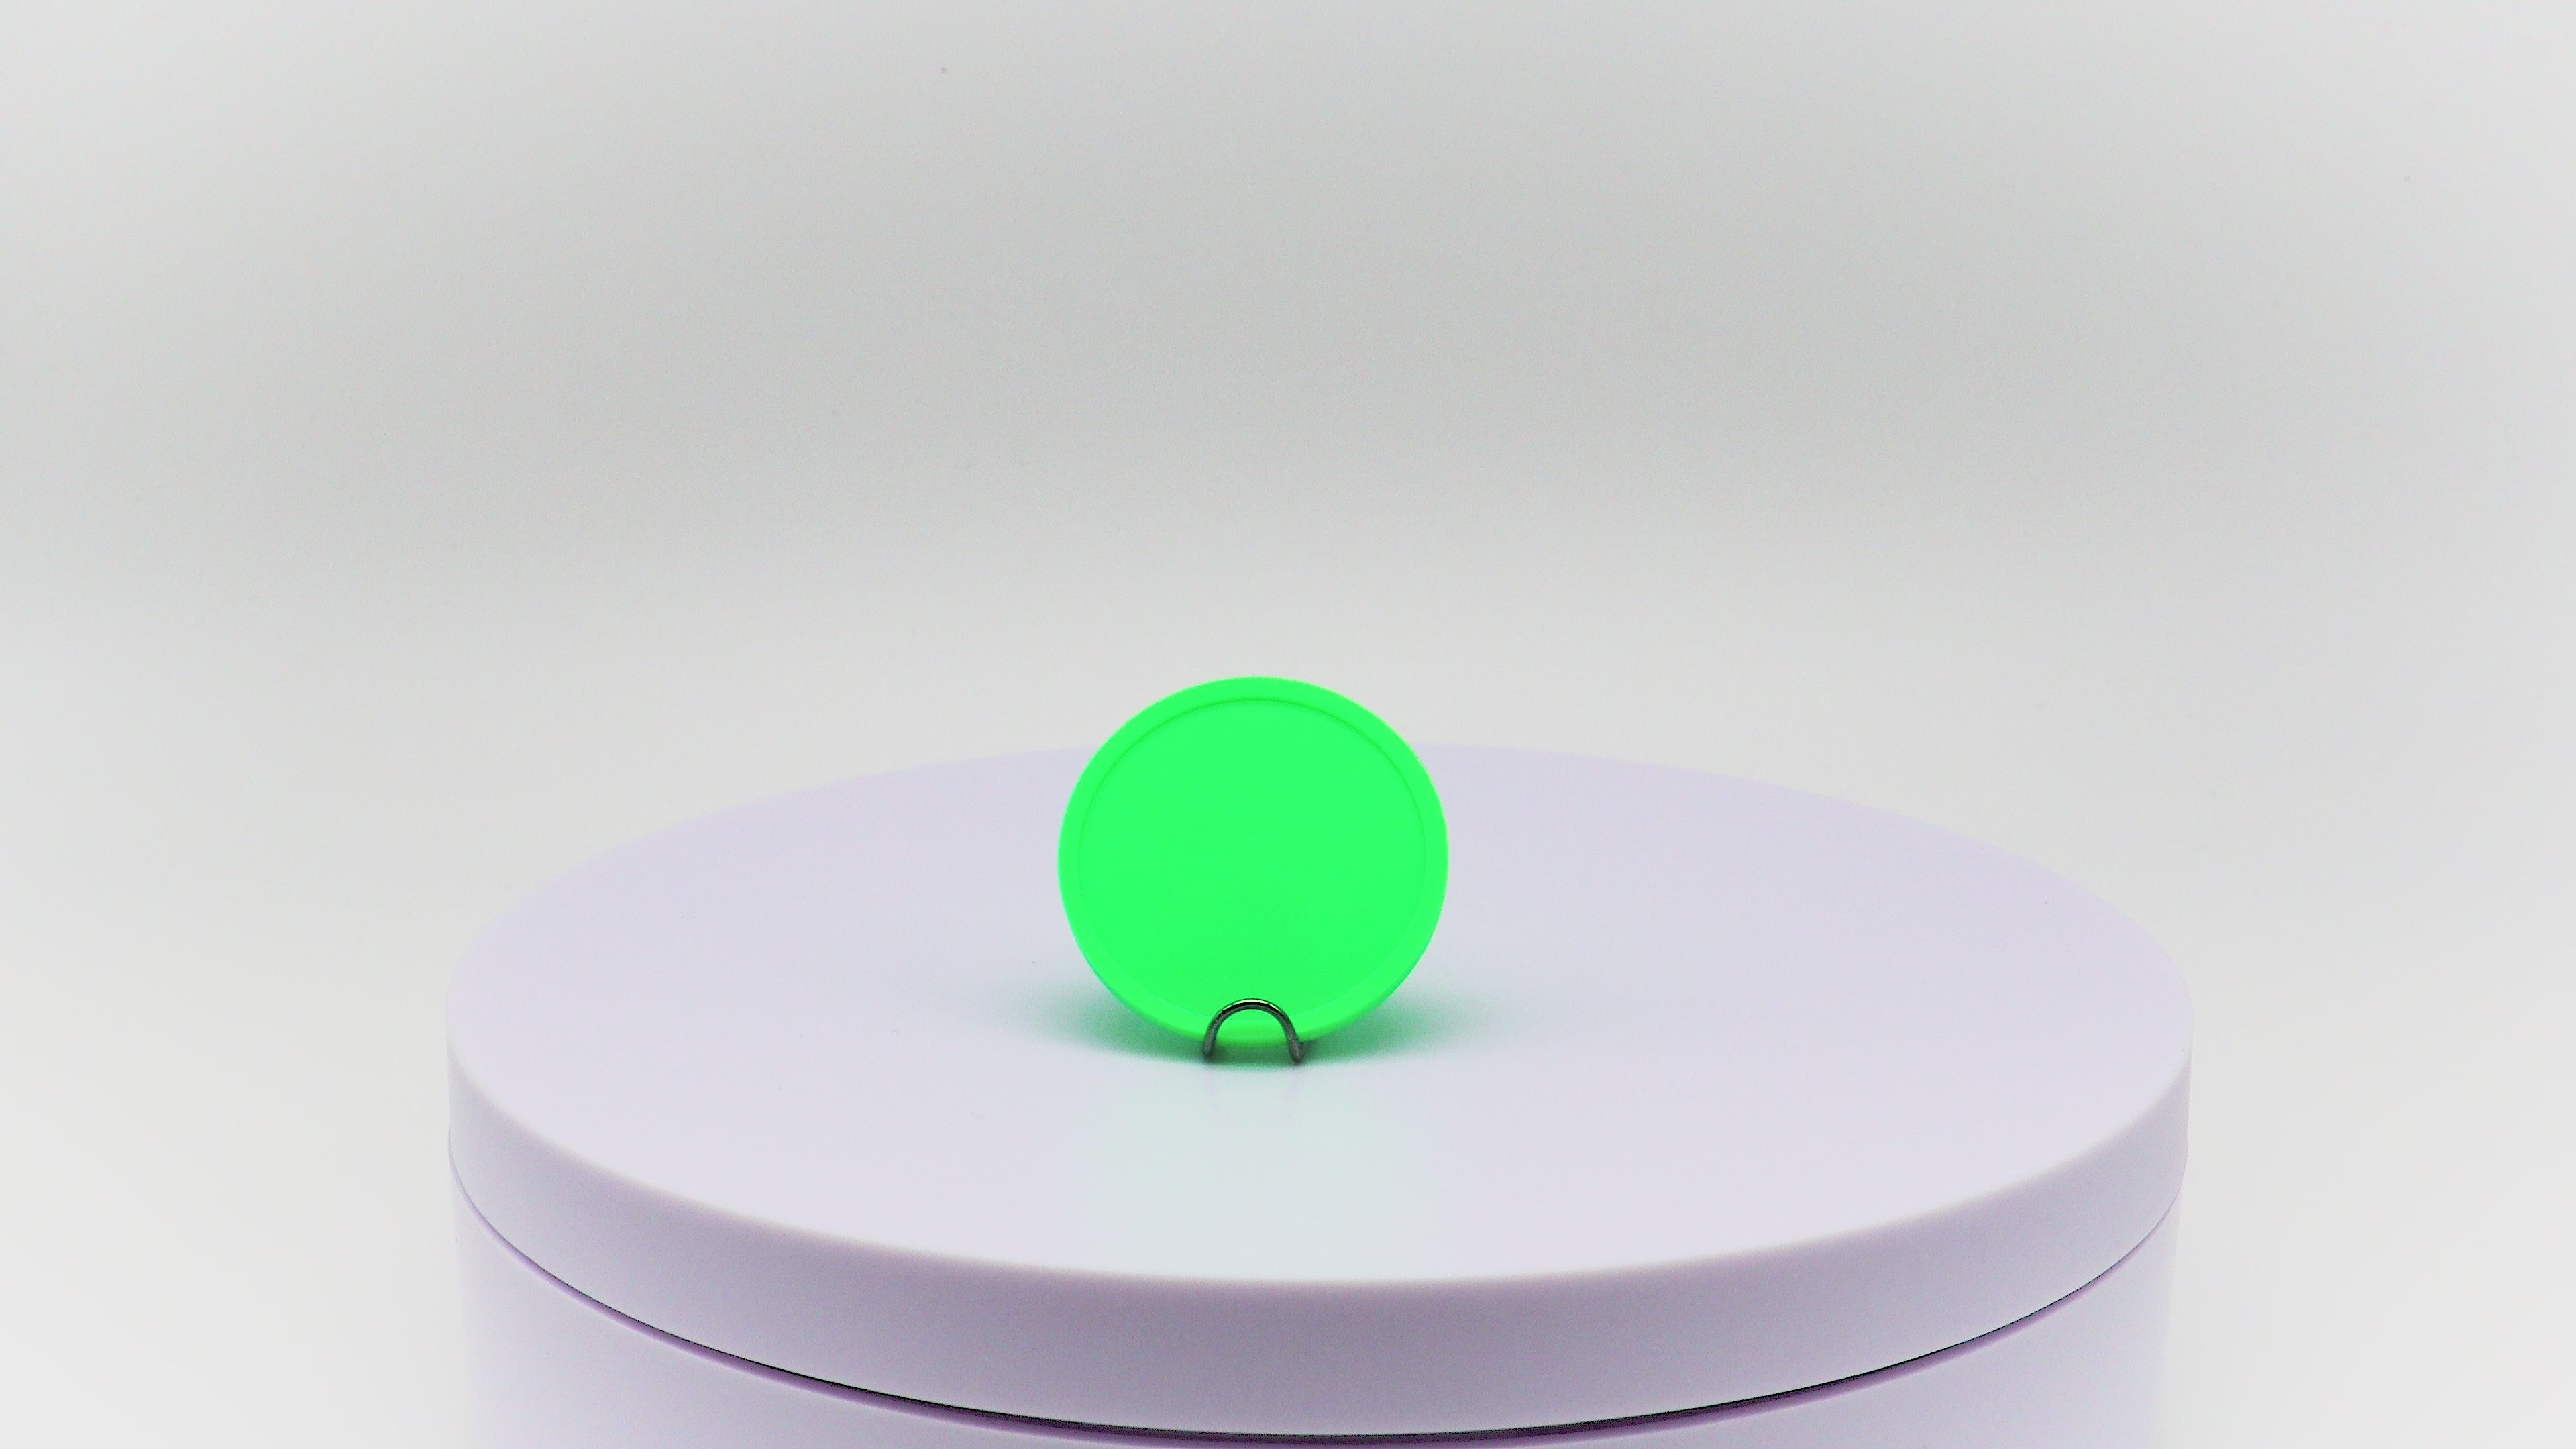 Video of neon green reward token rotating